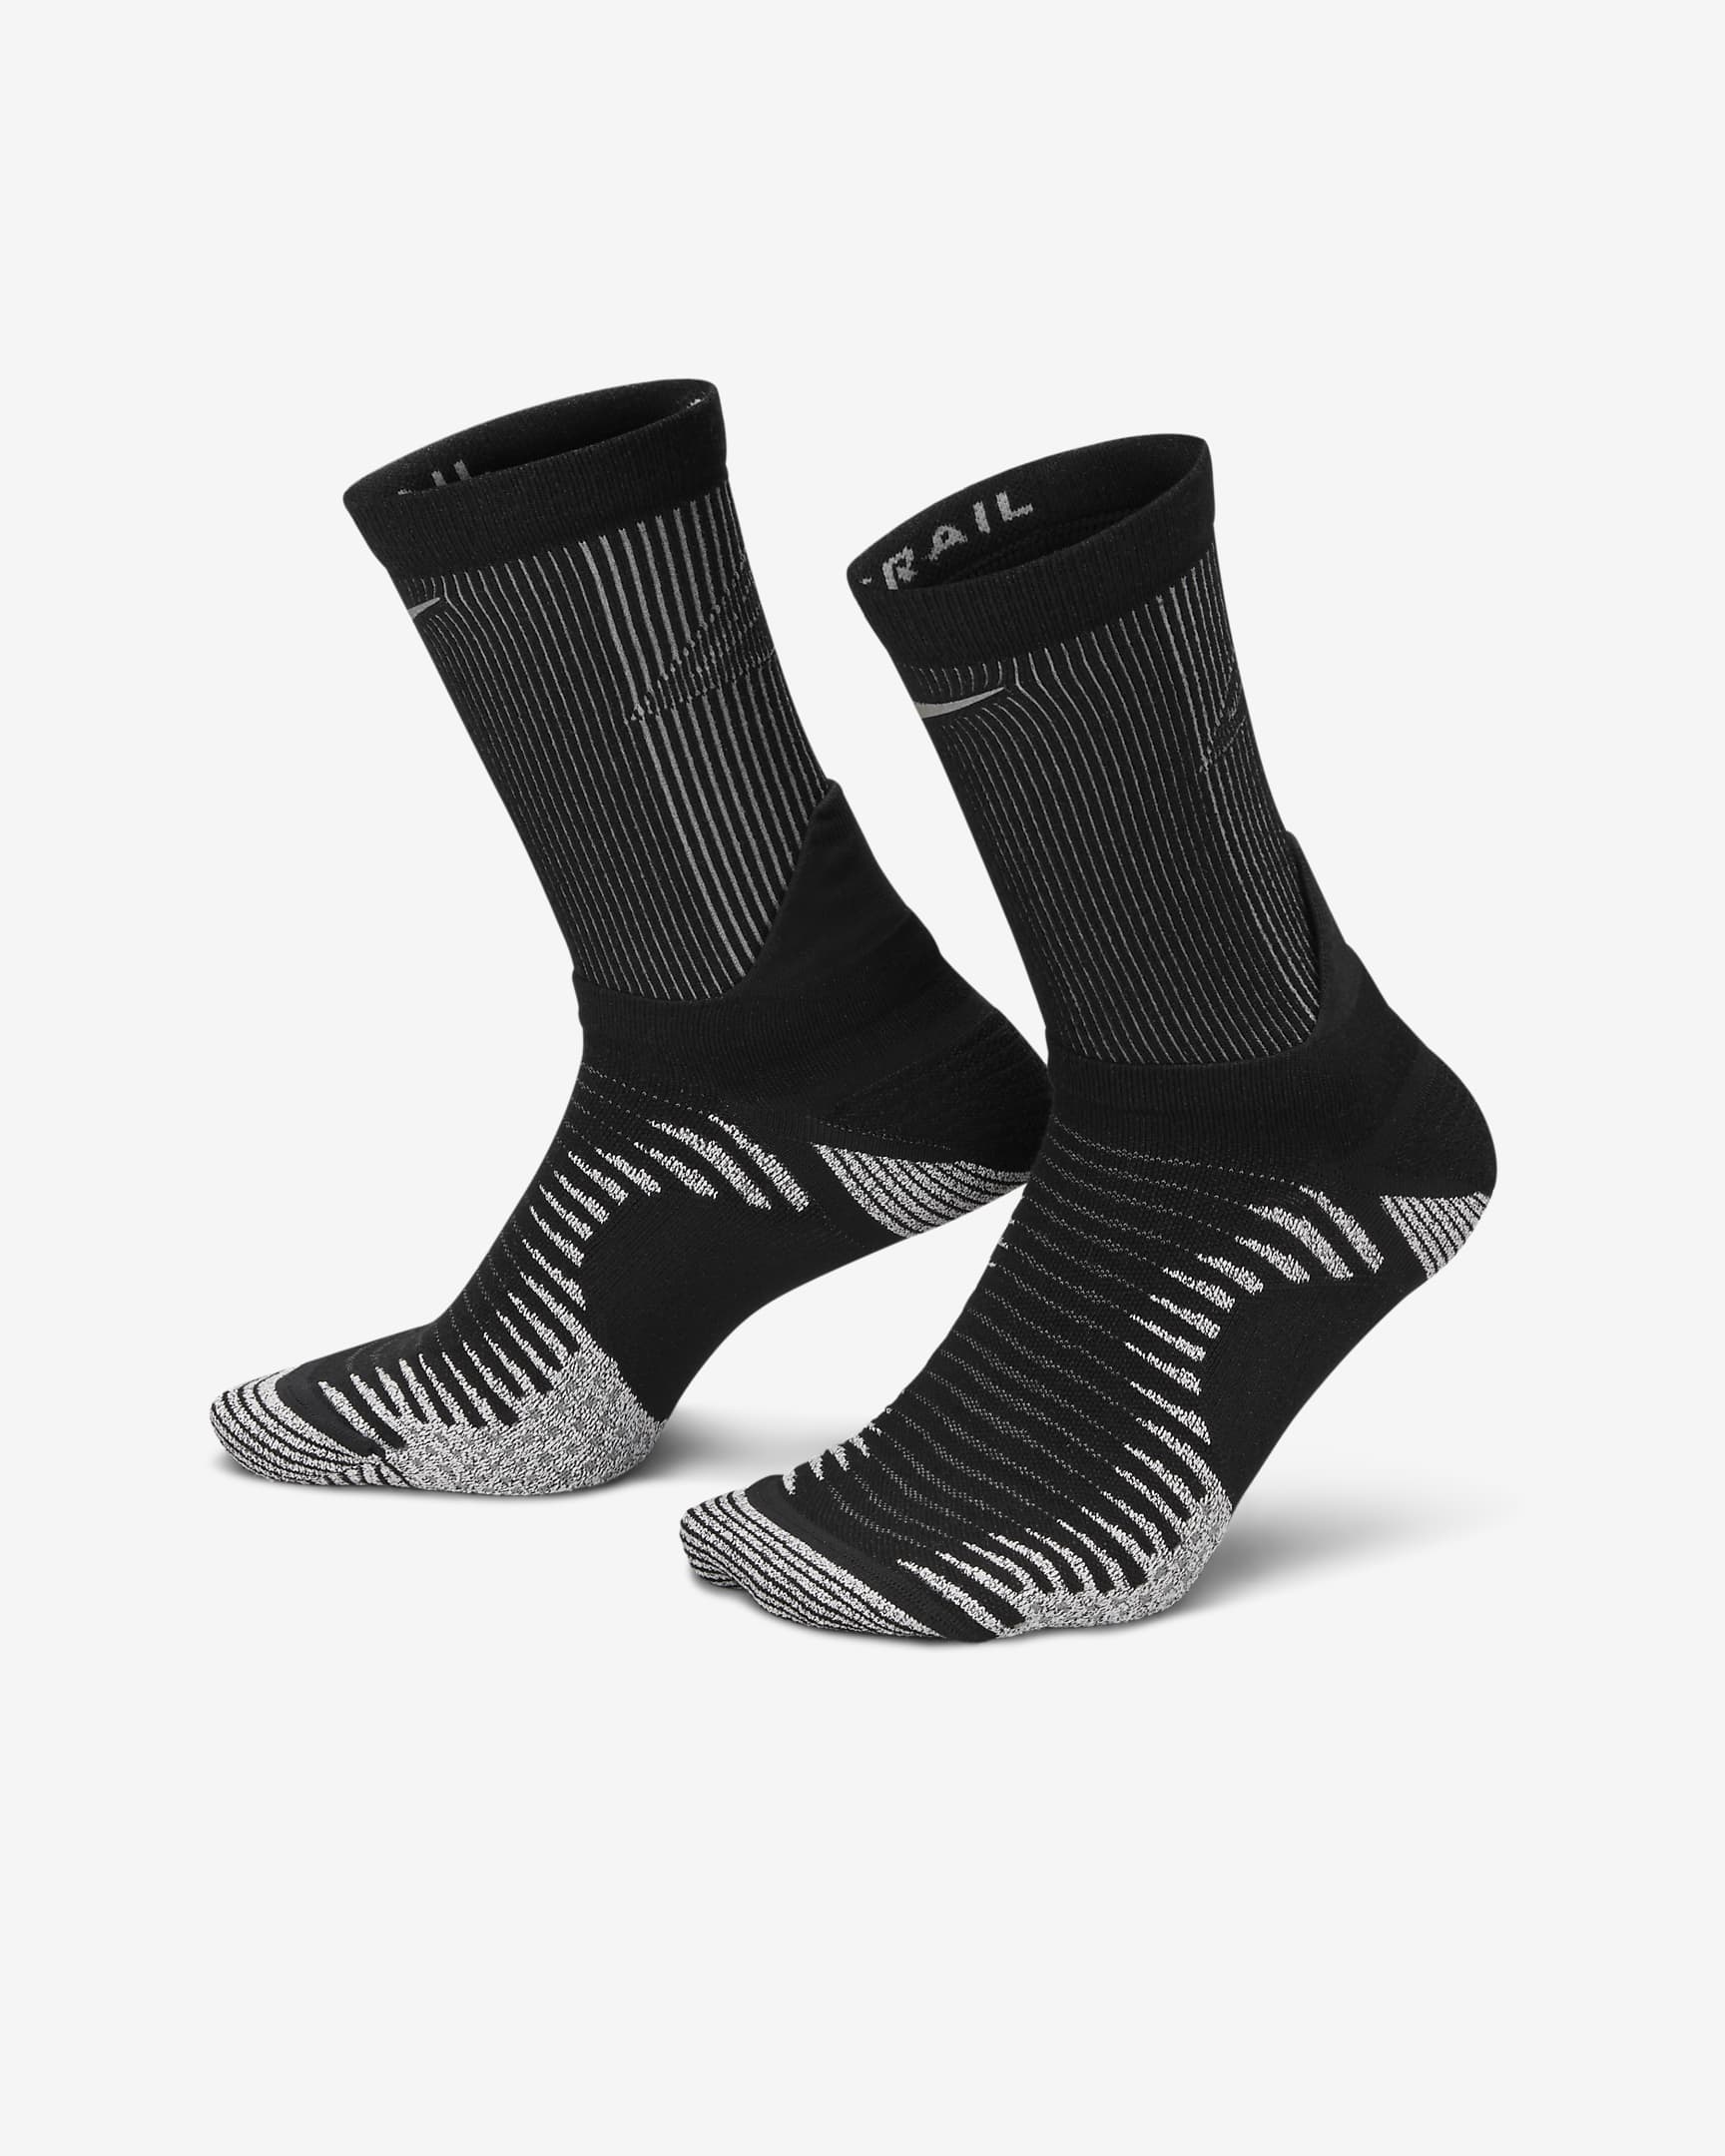 Nike Dri-FIT Trail-Running Crew Socks - Black/Black/Anthracite/Anthracite